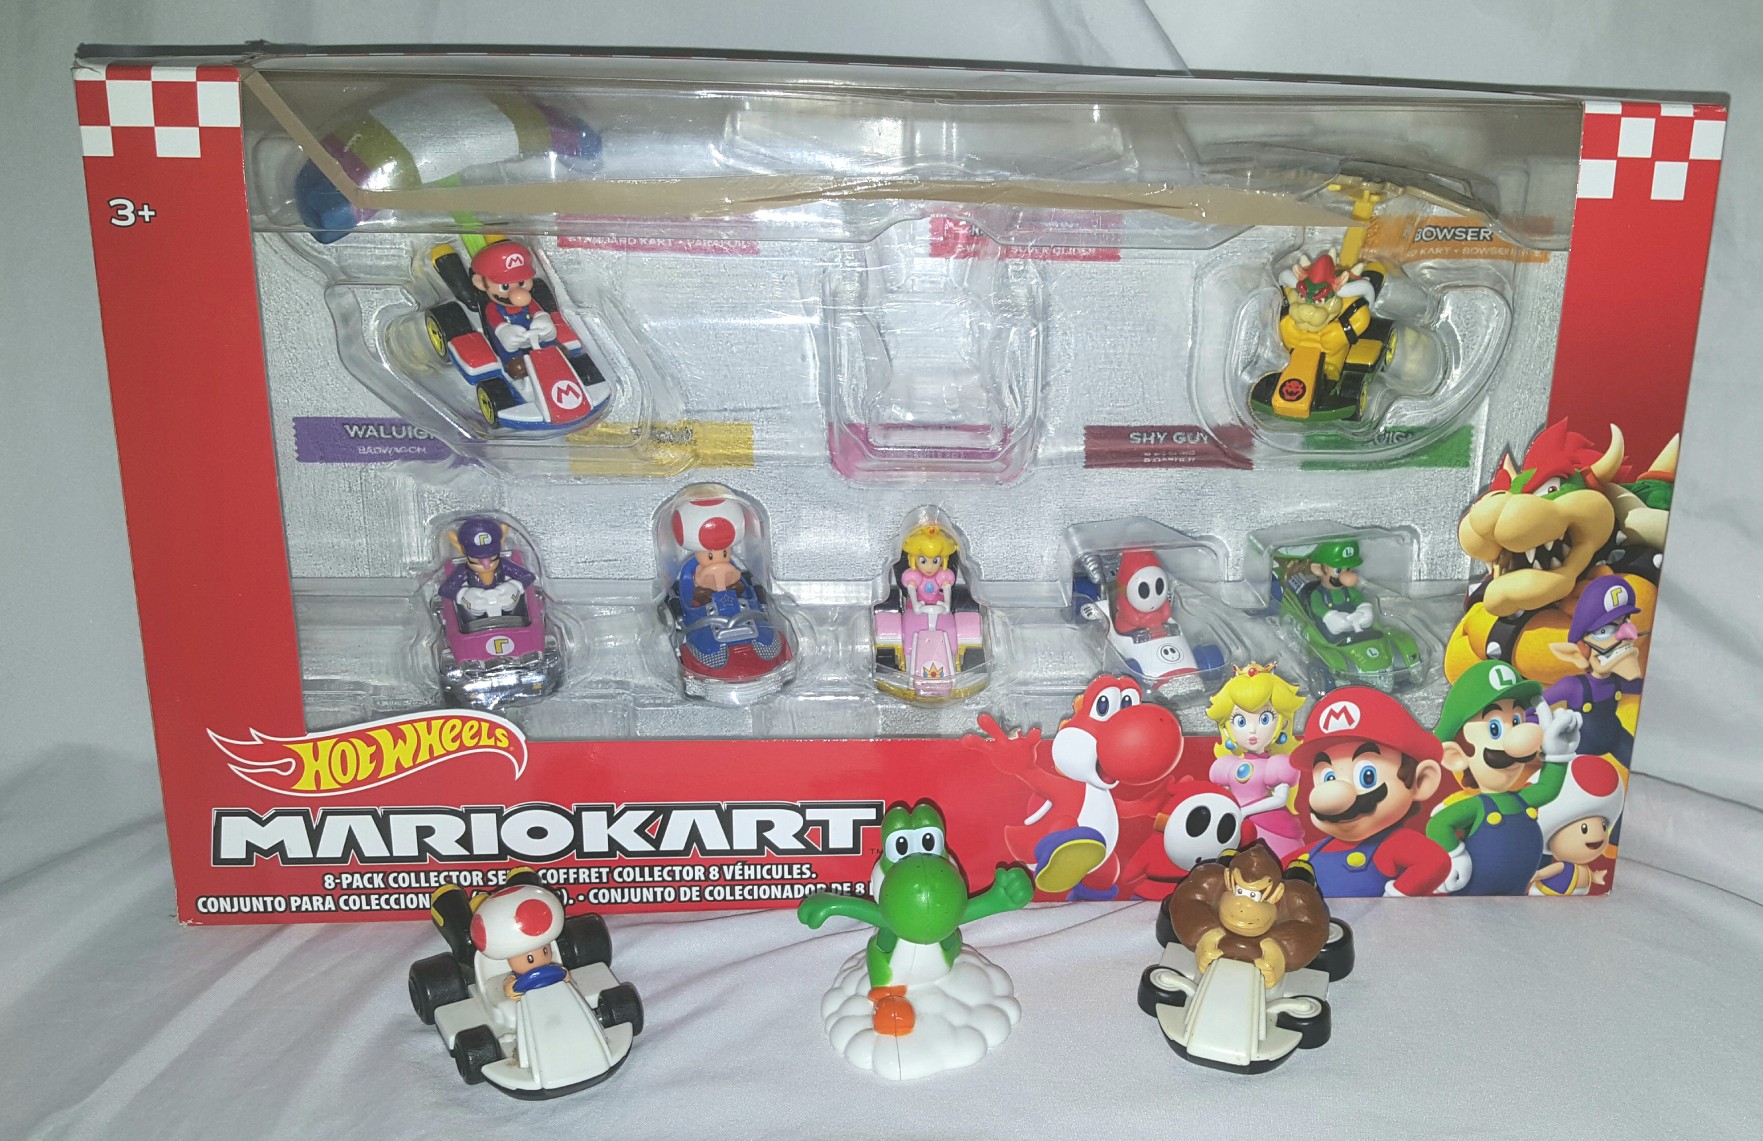 juguetes - Mario kart (Hotwheels)